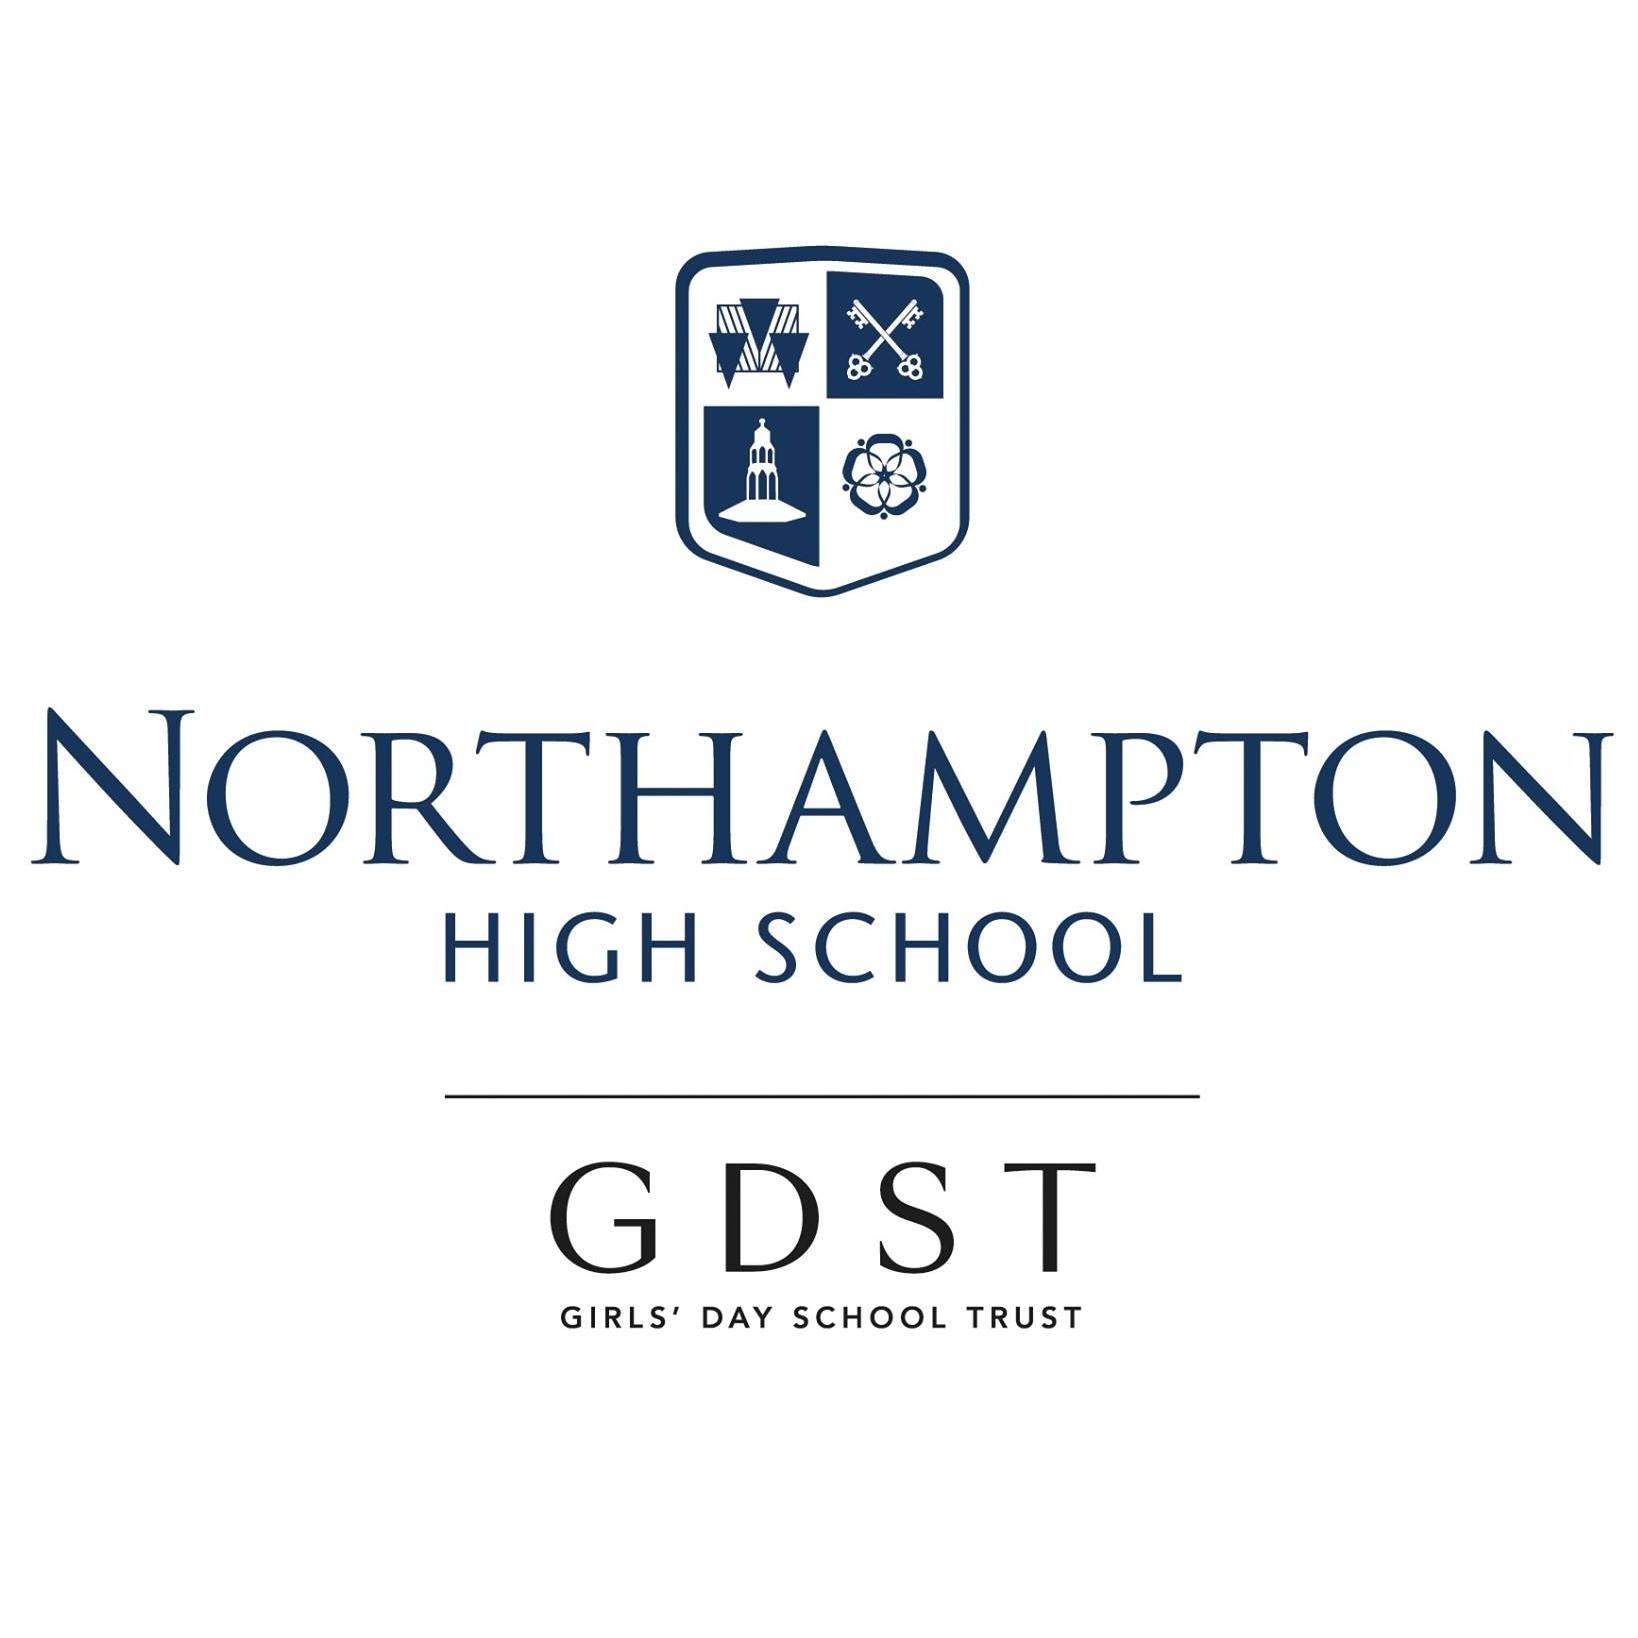 Northampton High School's logo